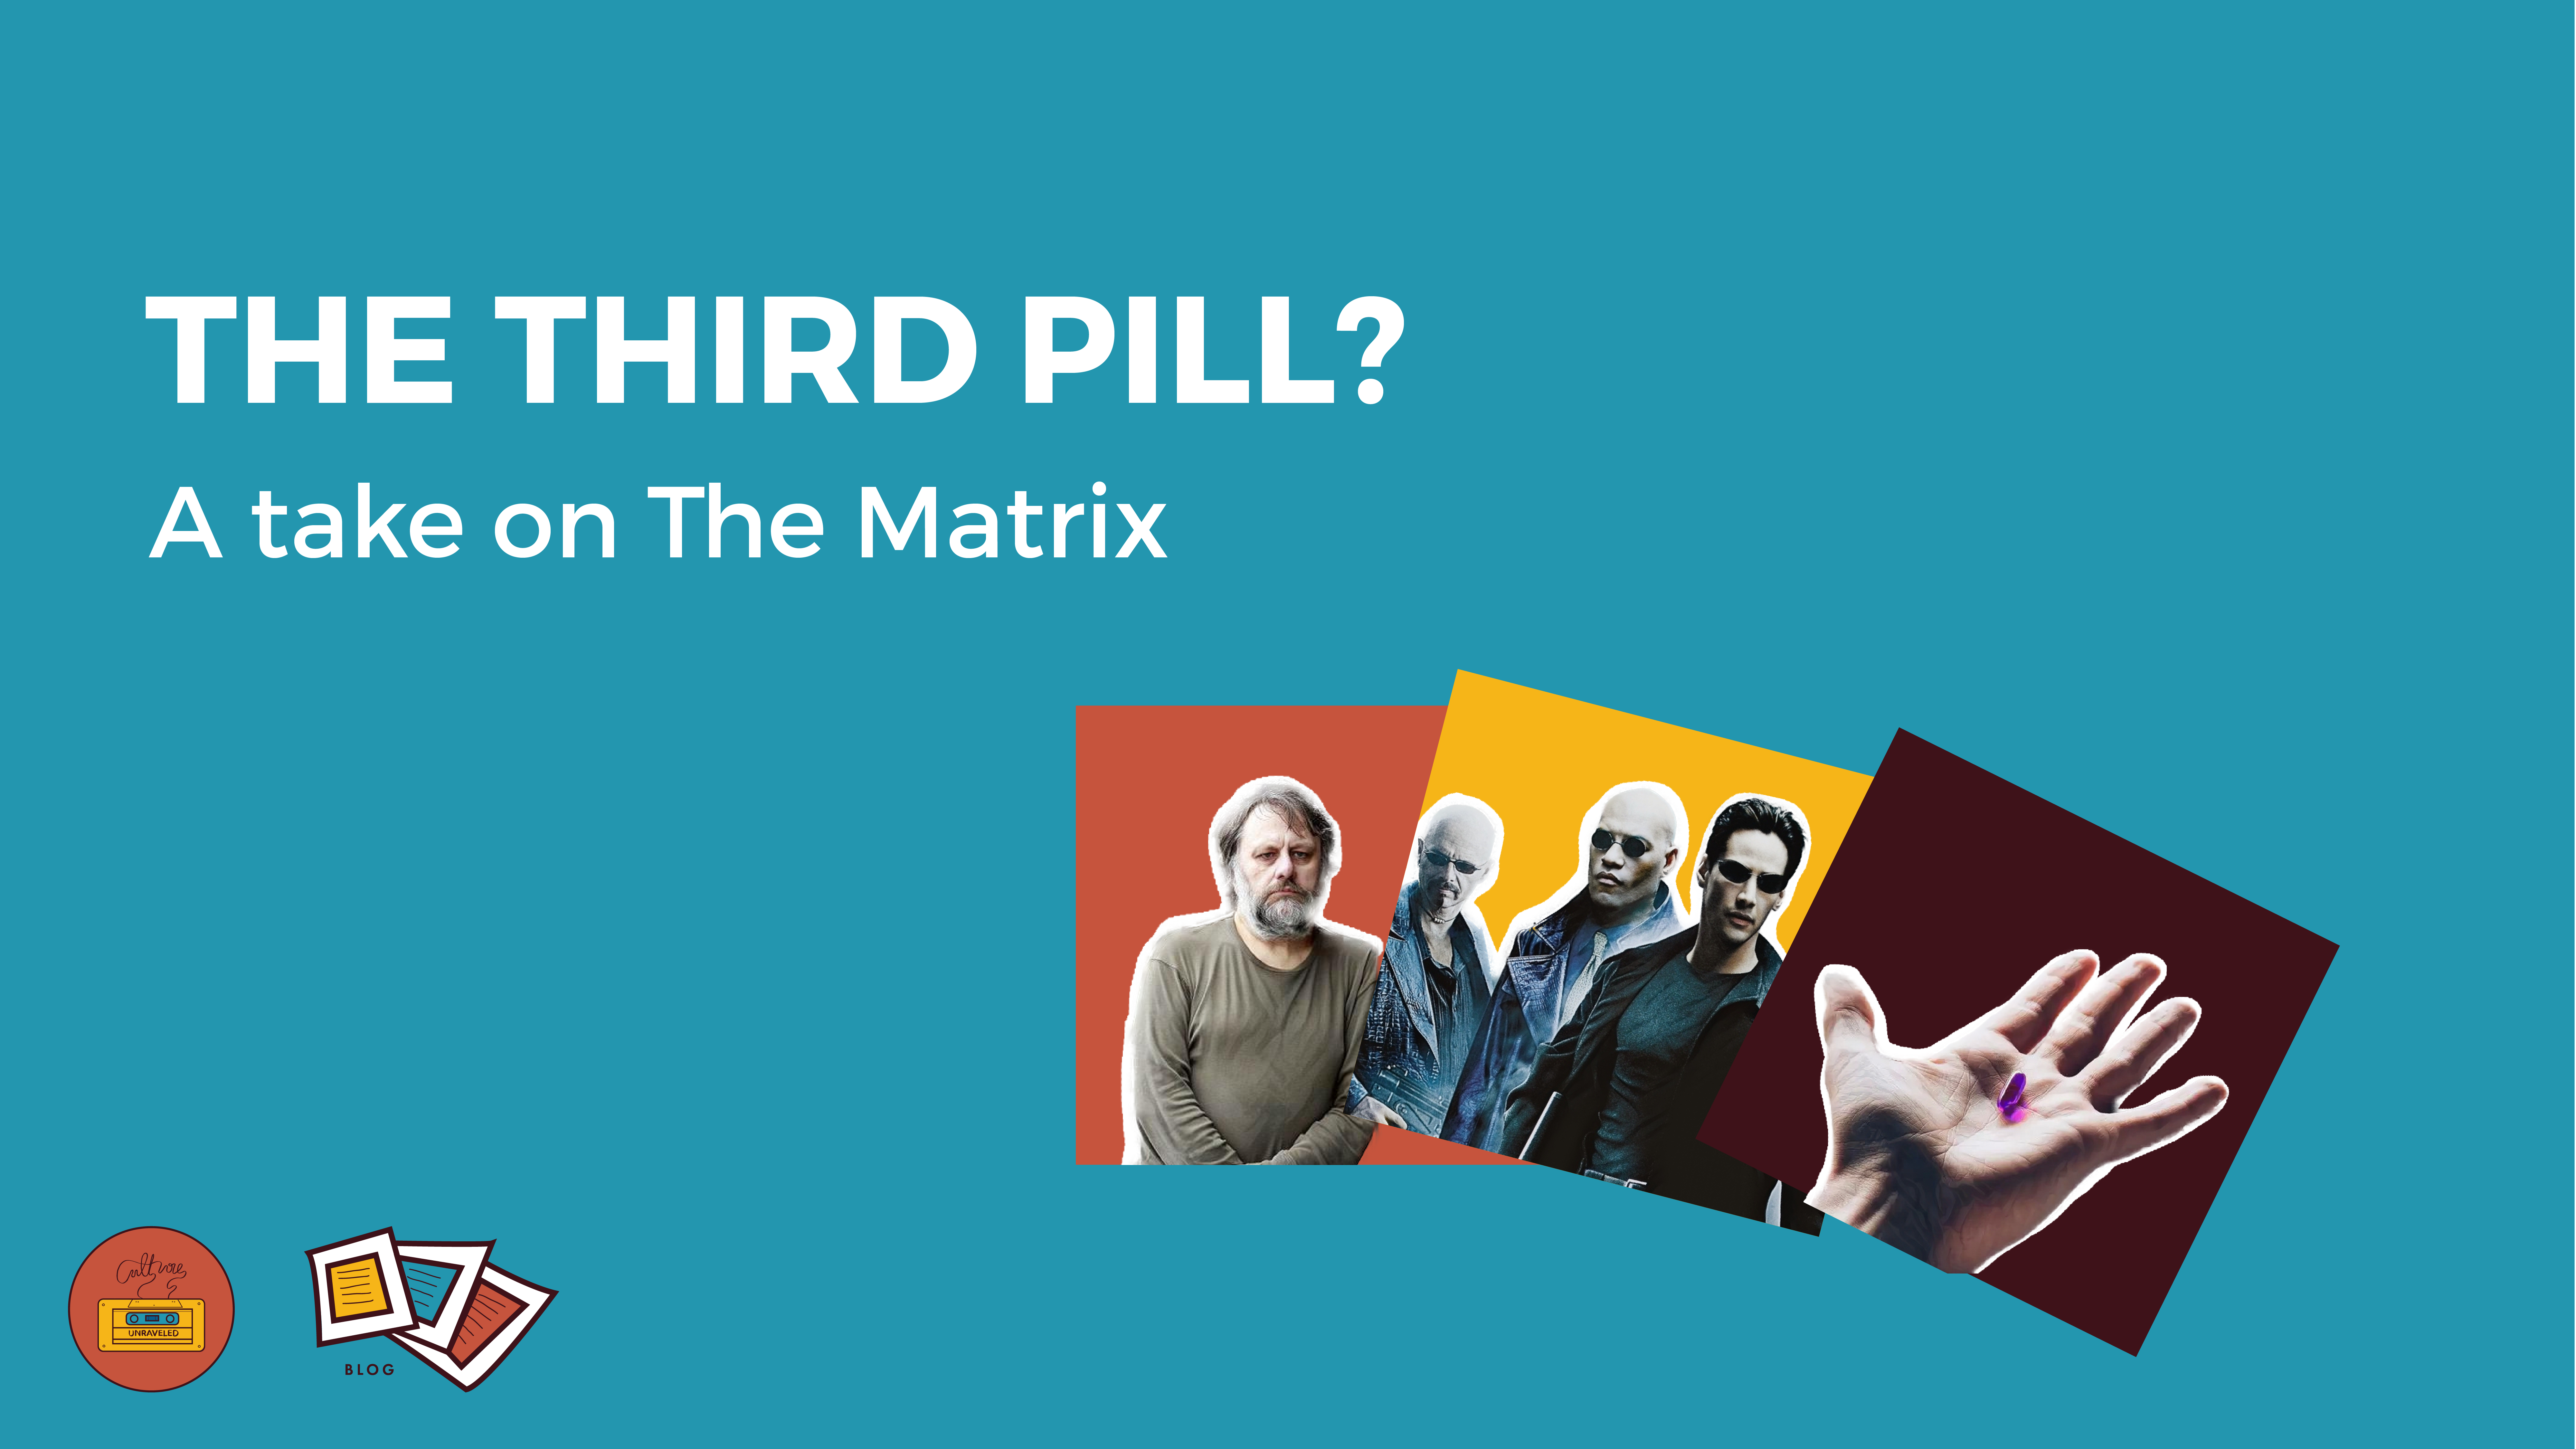 The Third Pill? A take on The Matrix